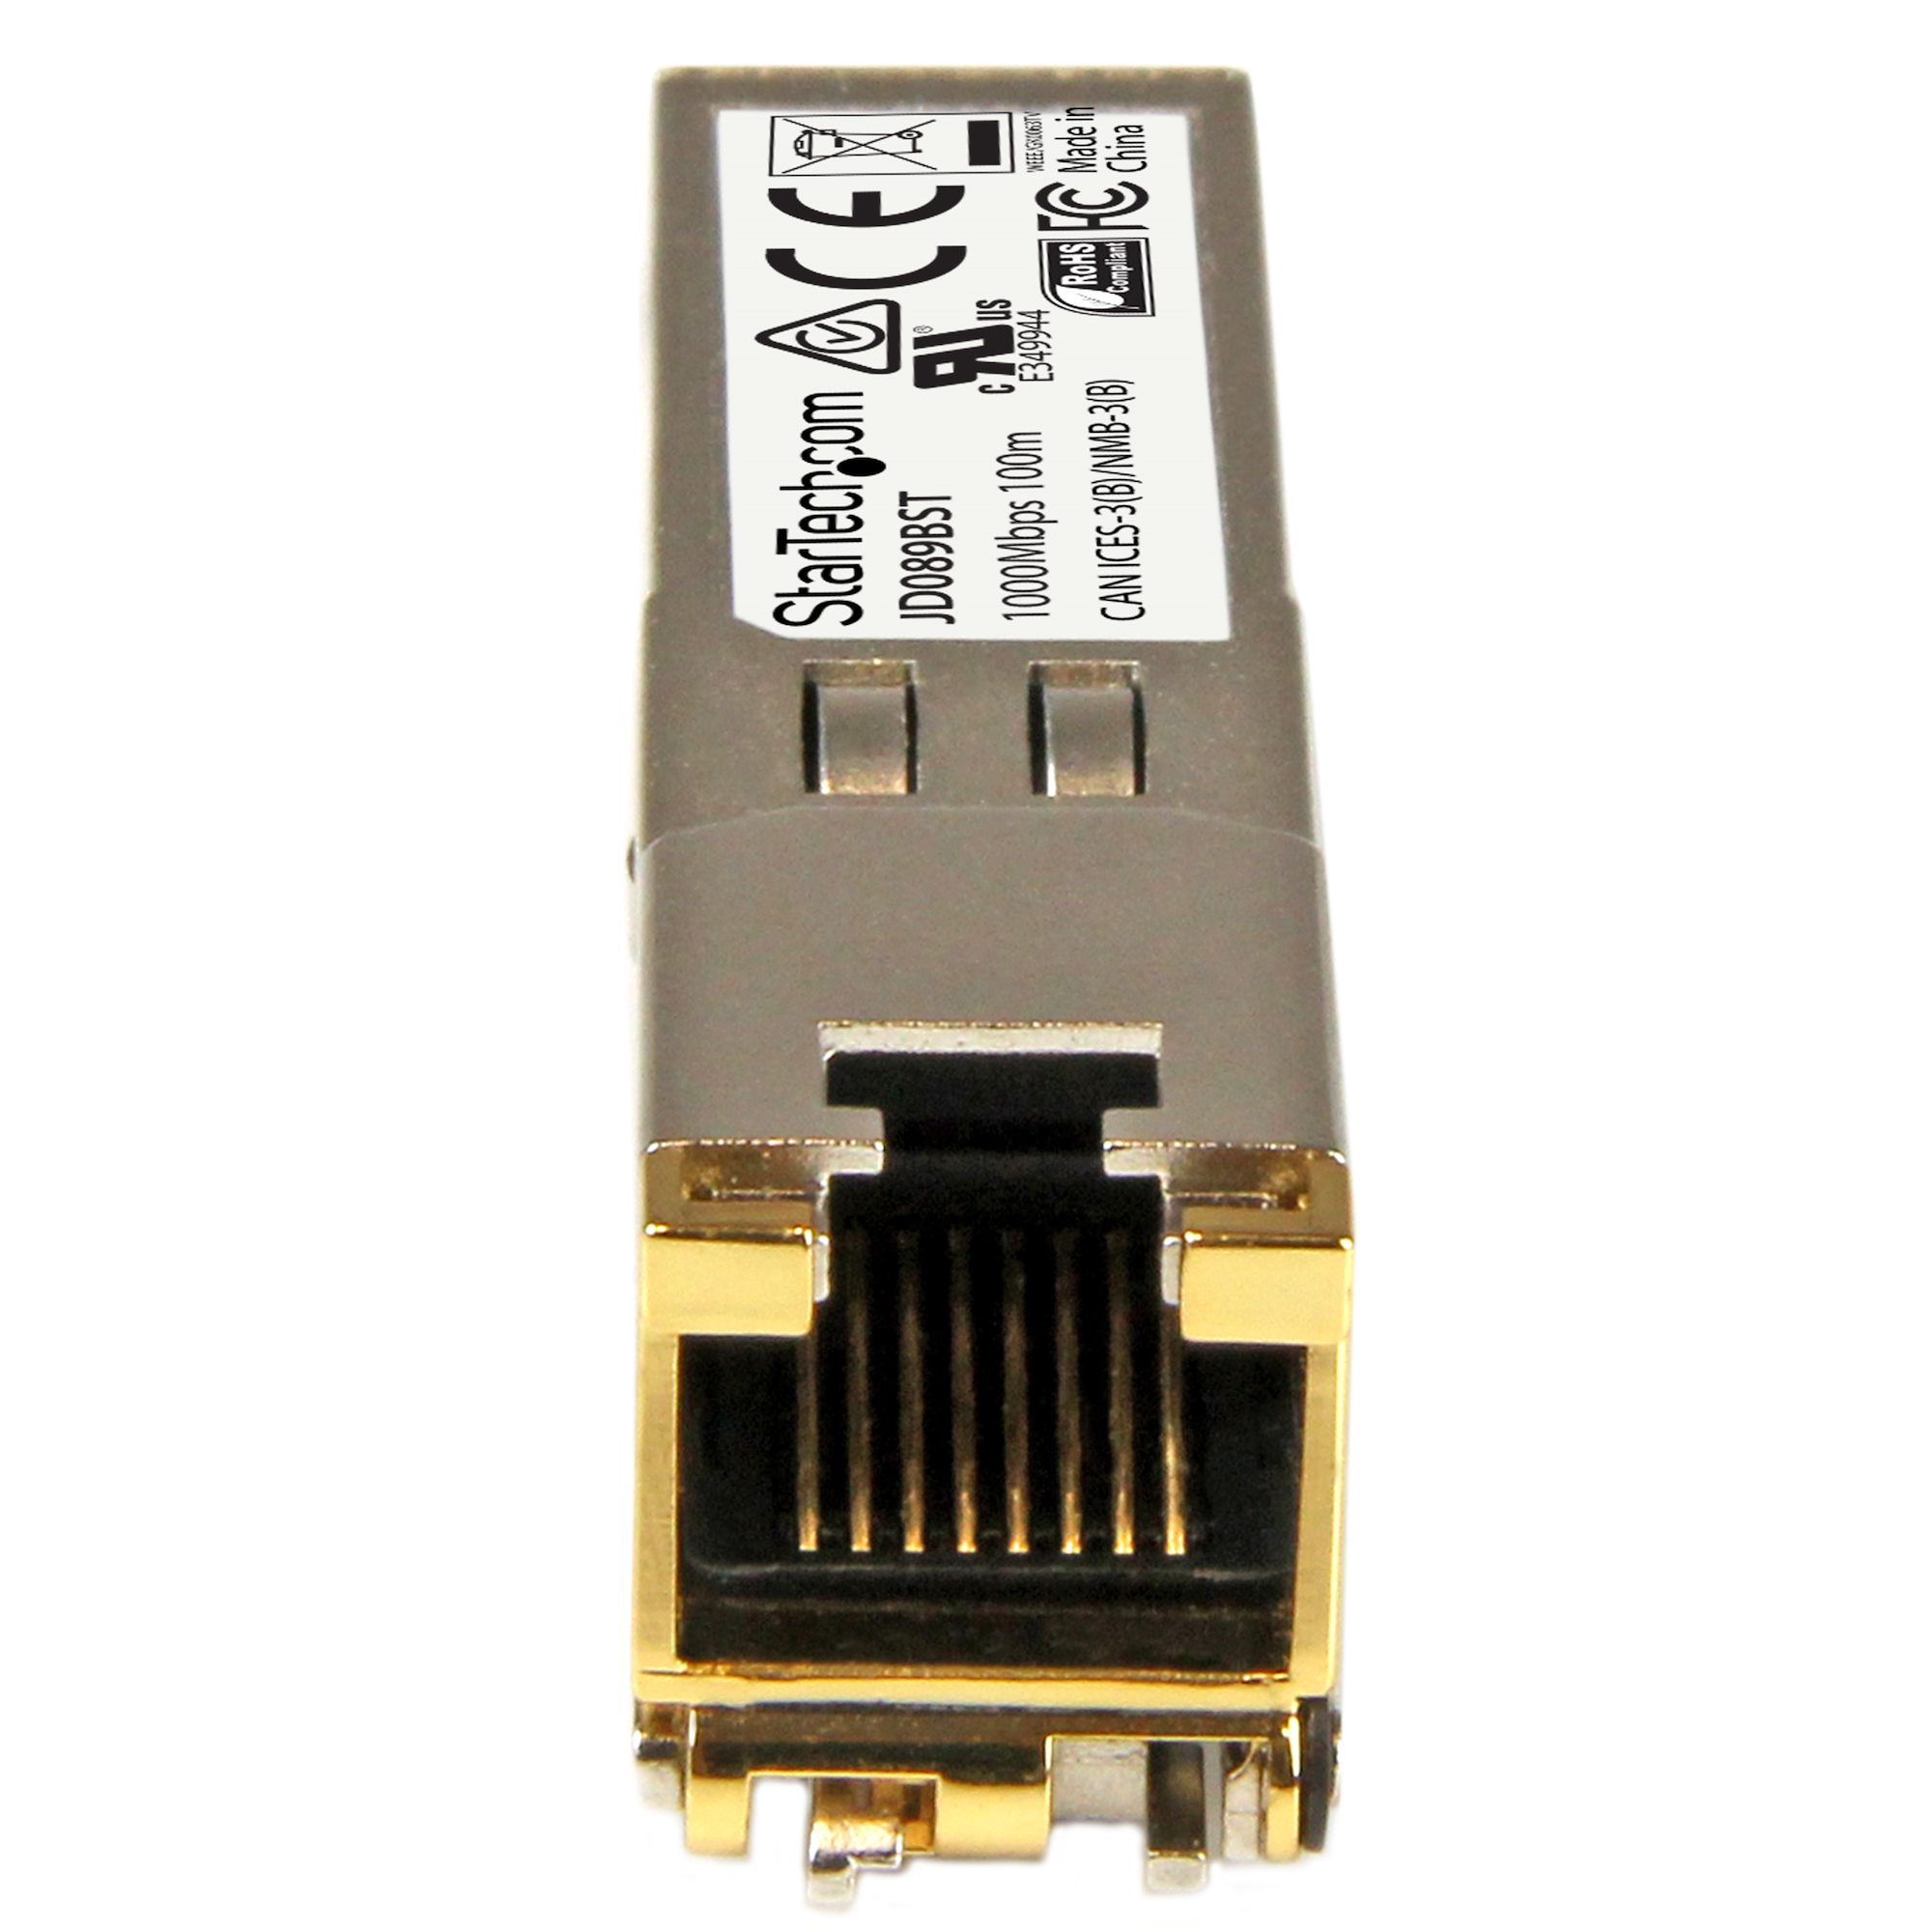 Mini-GBIC ipolex Compatible HPE JD089B/JD495A/JD089A/JC009A 1000BASE-T SFP Copper RJ-45 Transceiver Module CAT5e cable, 100-Meter 